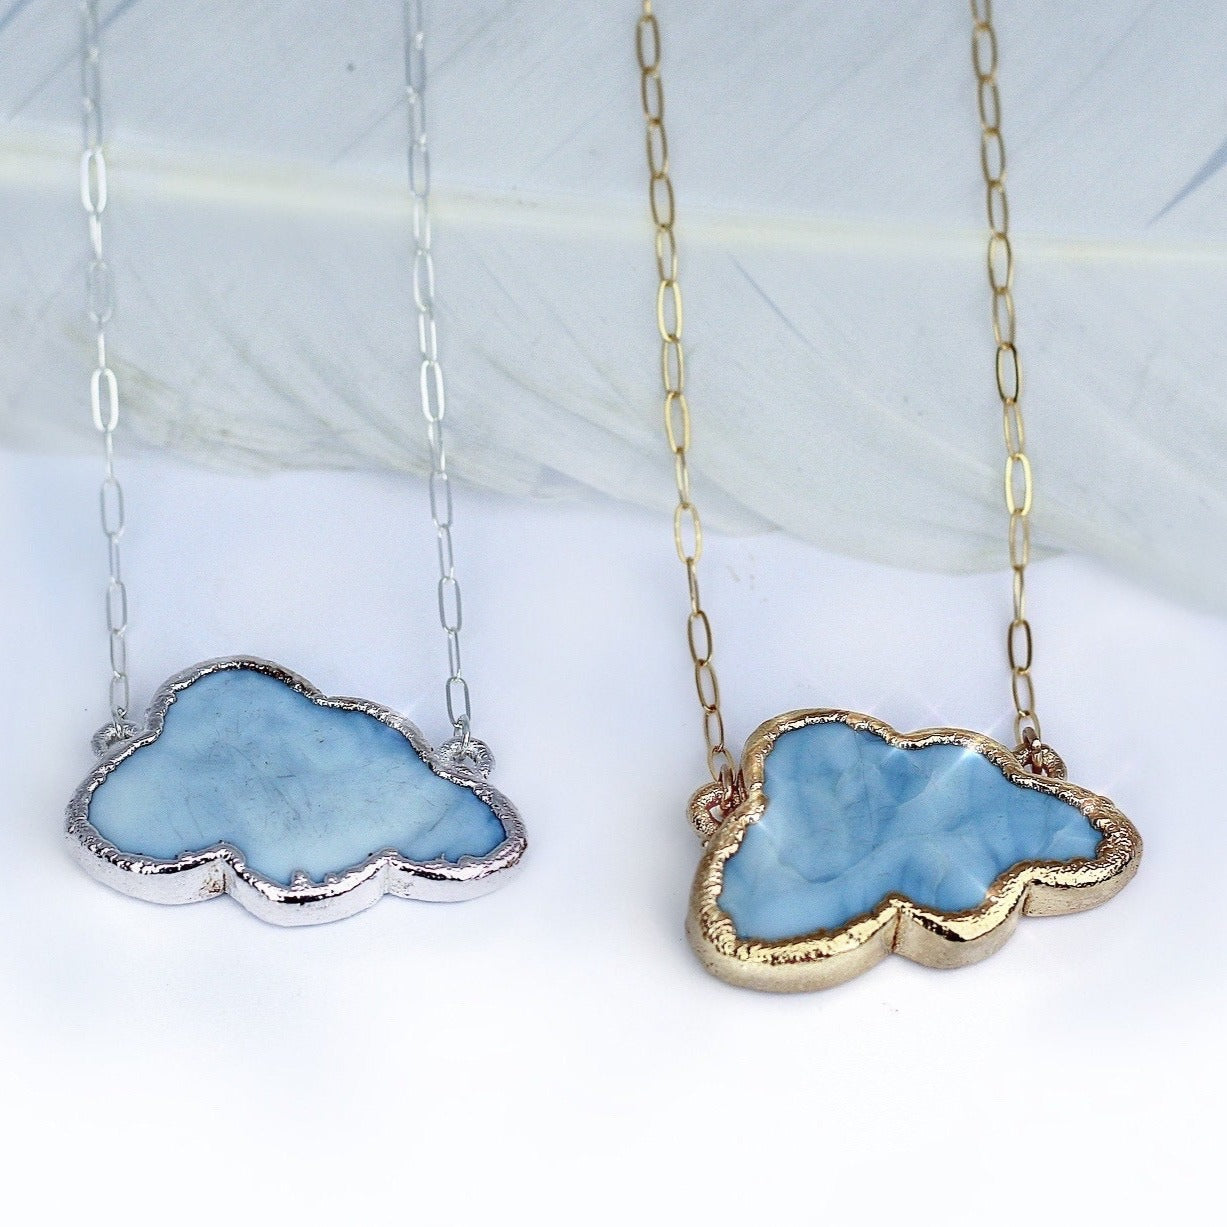 Blue Opal Cloud Necklace, Cloud Pendant Necklace, Cloud Shaped Pendant, Crystal Cloud, Cloud Jewelry, Cloud Gemstone Necklace, Sky Blue Gem